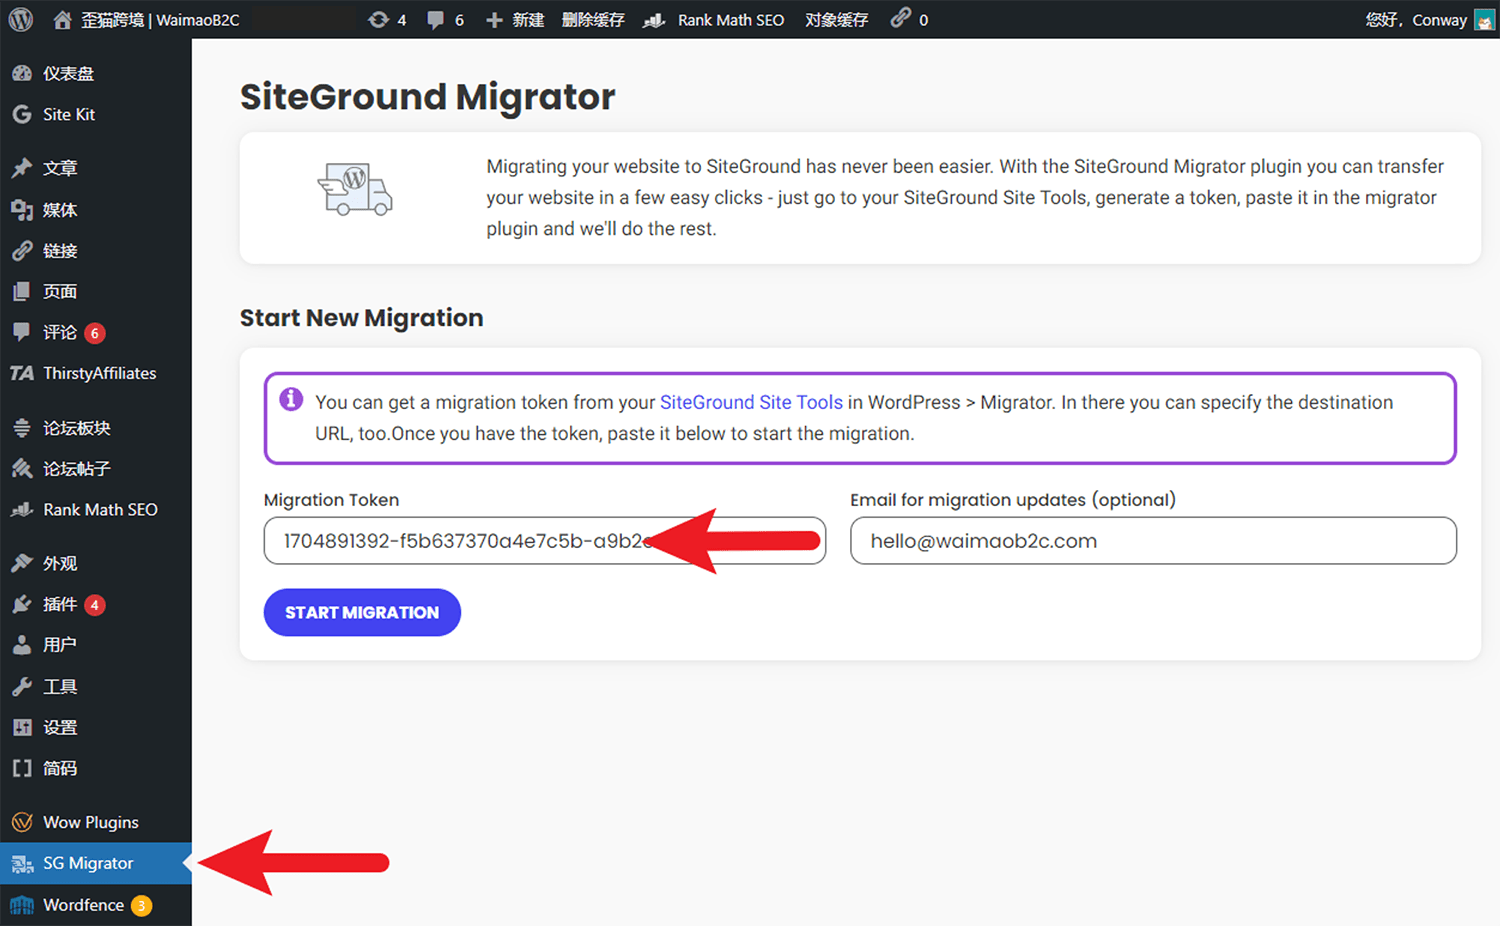 SiteGround 主机使用插件 SiteGround Migrator 完成 WordPress 网站搬家操作流程 | 歪猫跨境 WaimaoB2C